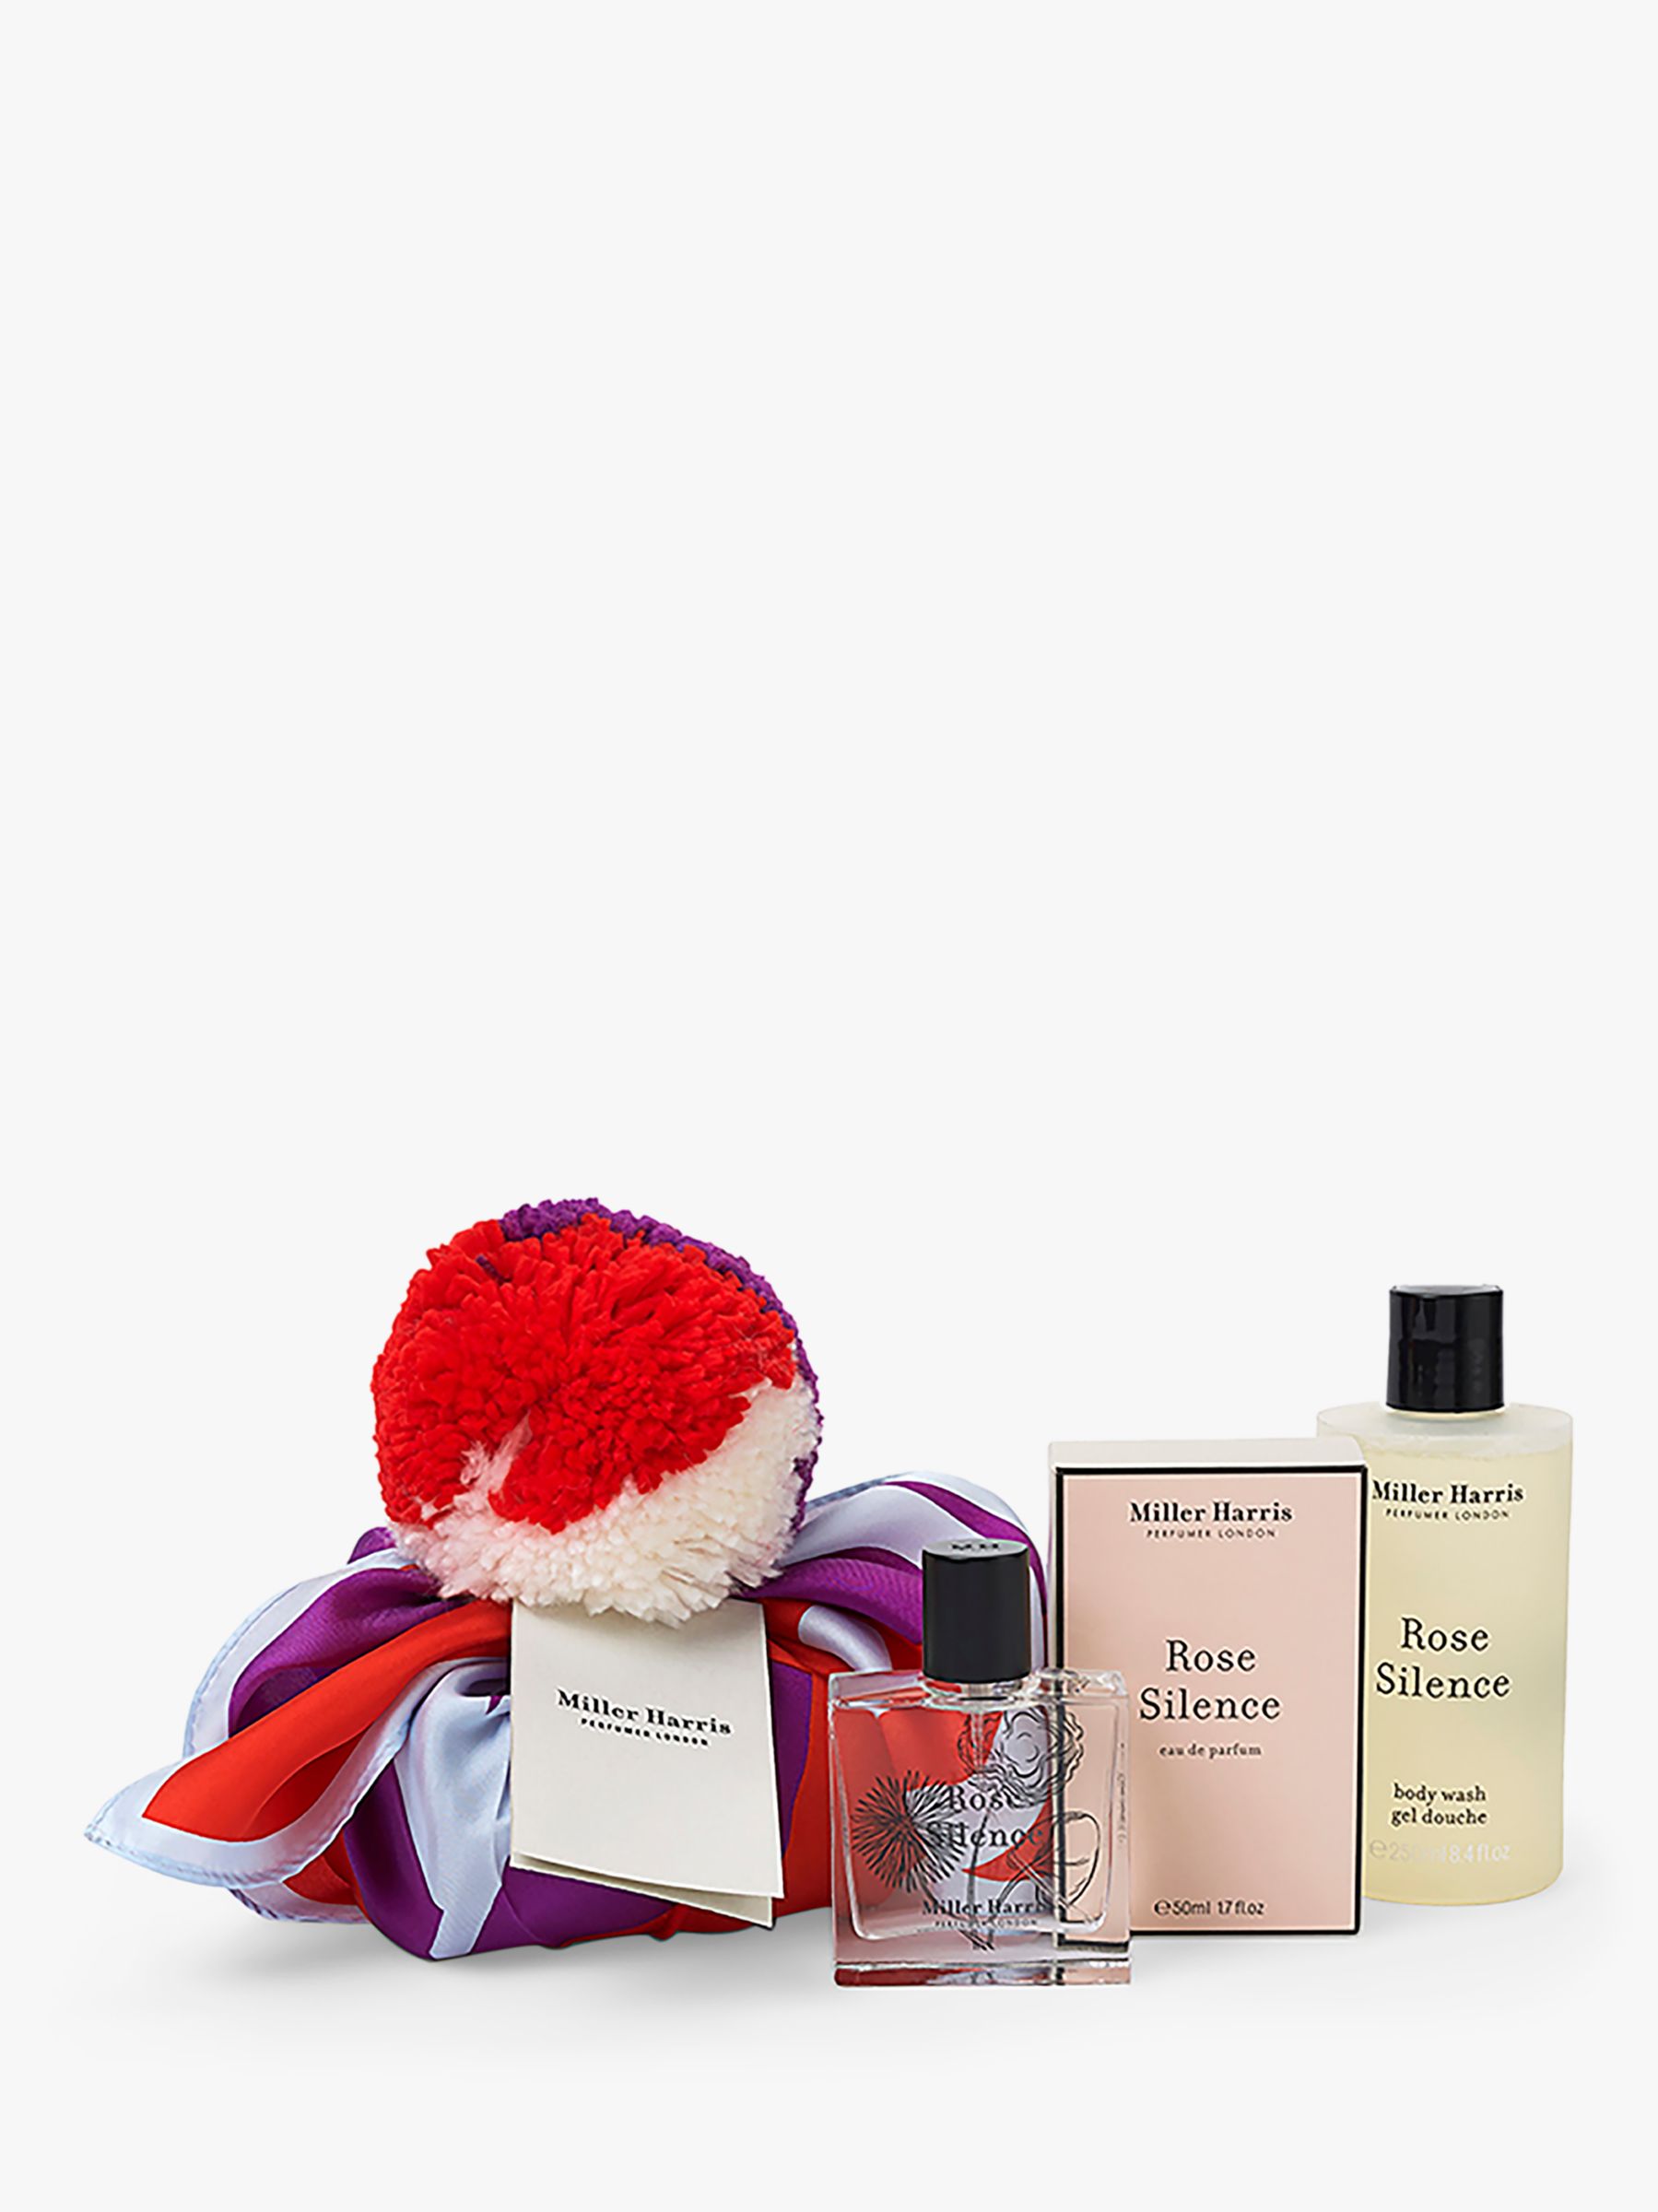 Miller Harris Rose Silence 50ml Eau de Parfum Fragrance Gift Set